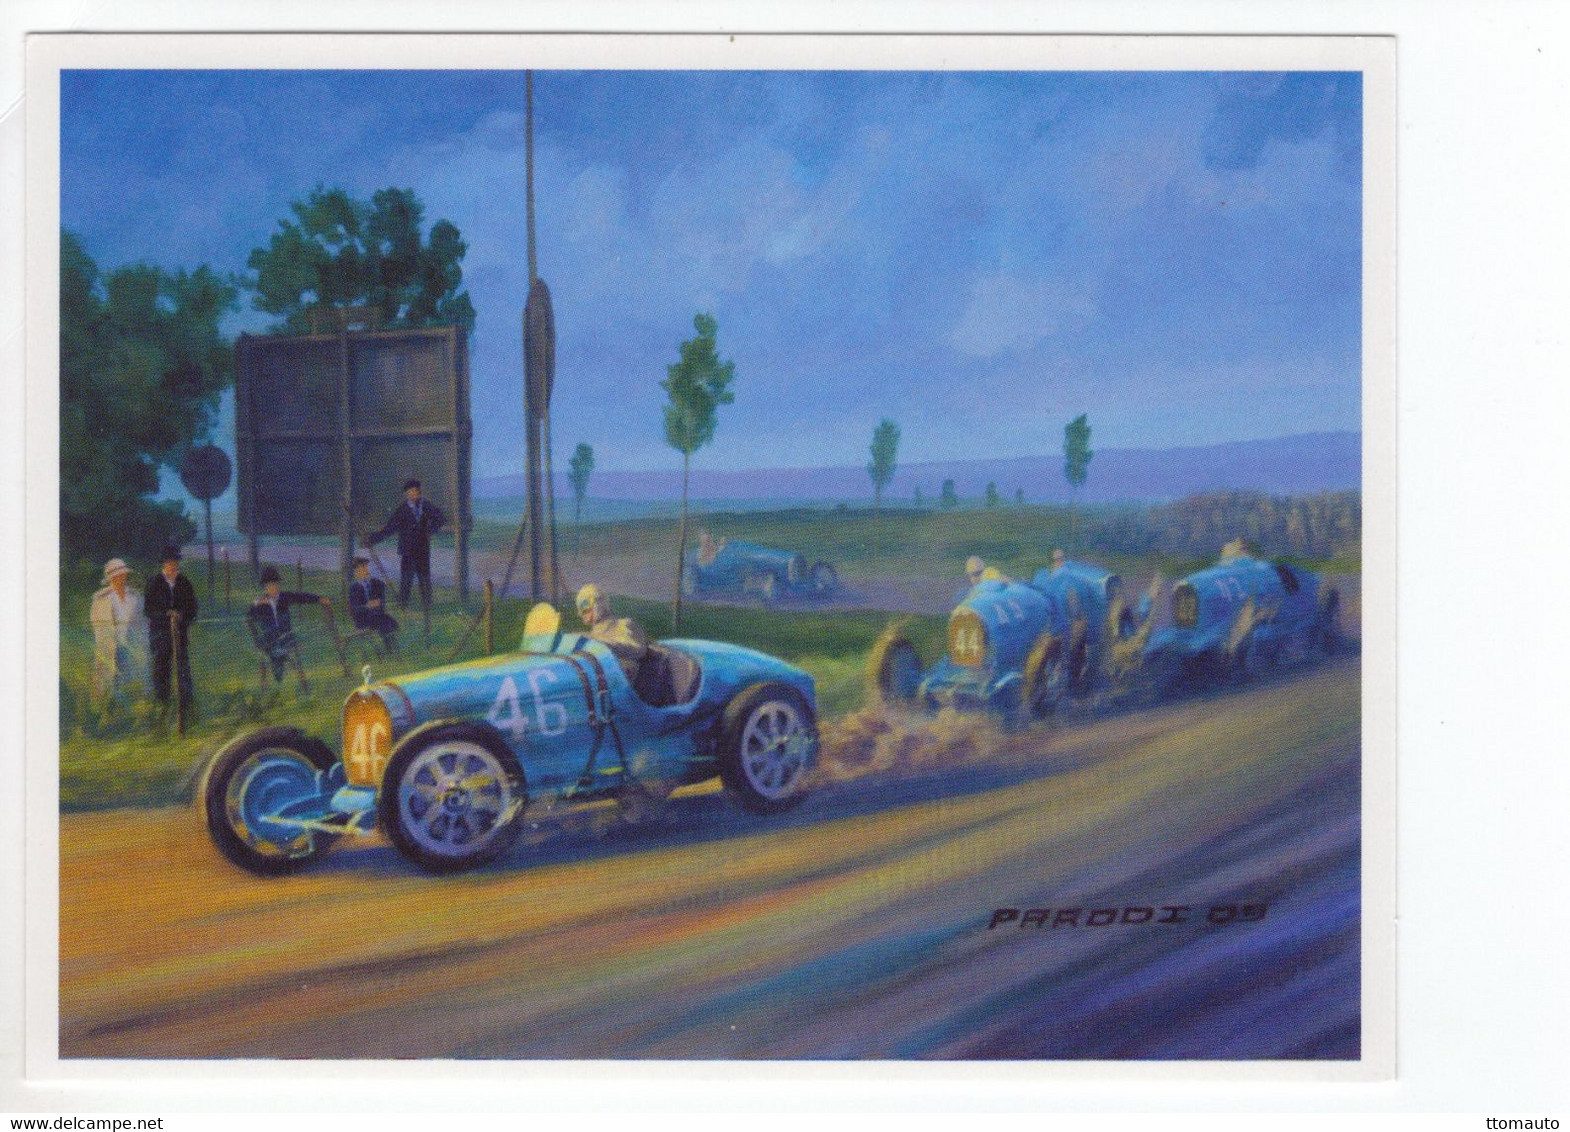 Bugatti Type 35 -  Grand Prix De Reims 1928  -  Pilote Louis Chiron  -  Artiste: Christophe Parodi -   Art Card  -  CPM - Grand Prix / F1